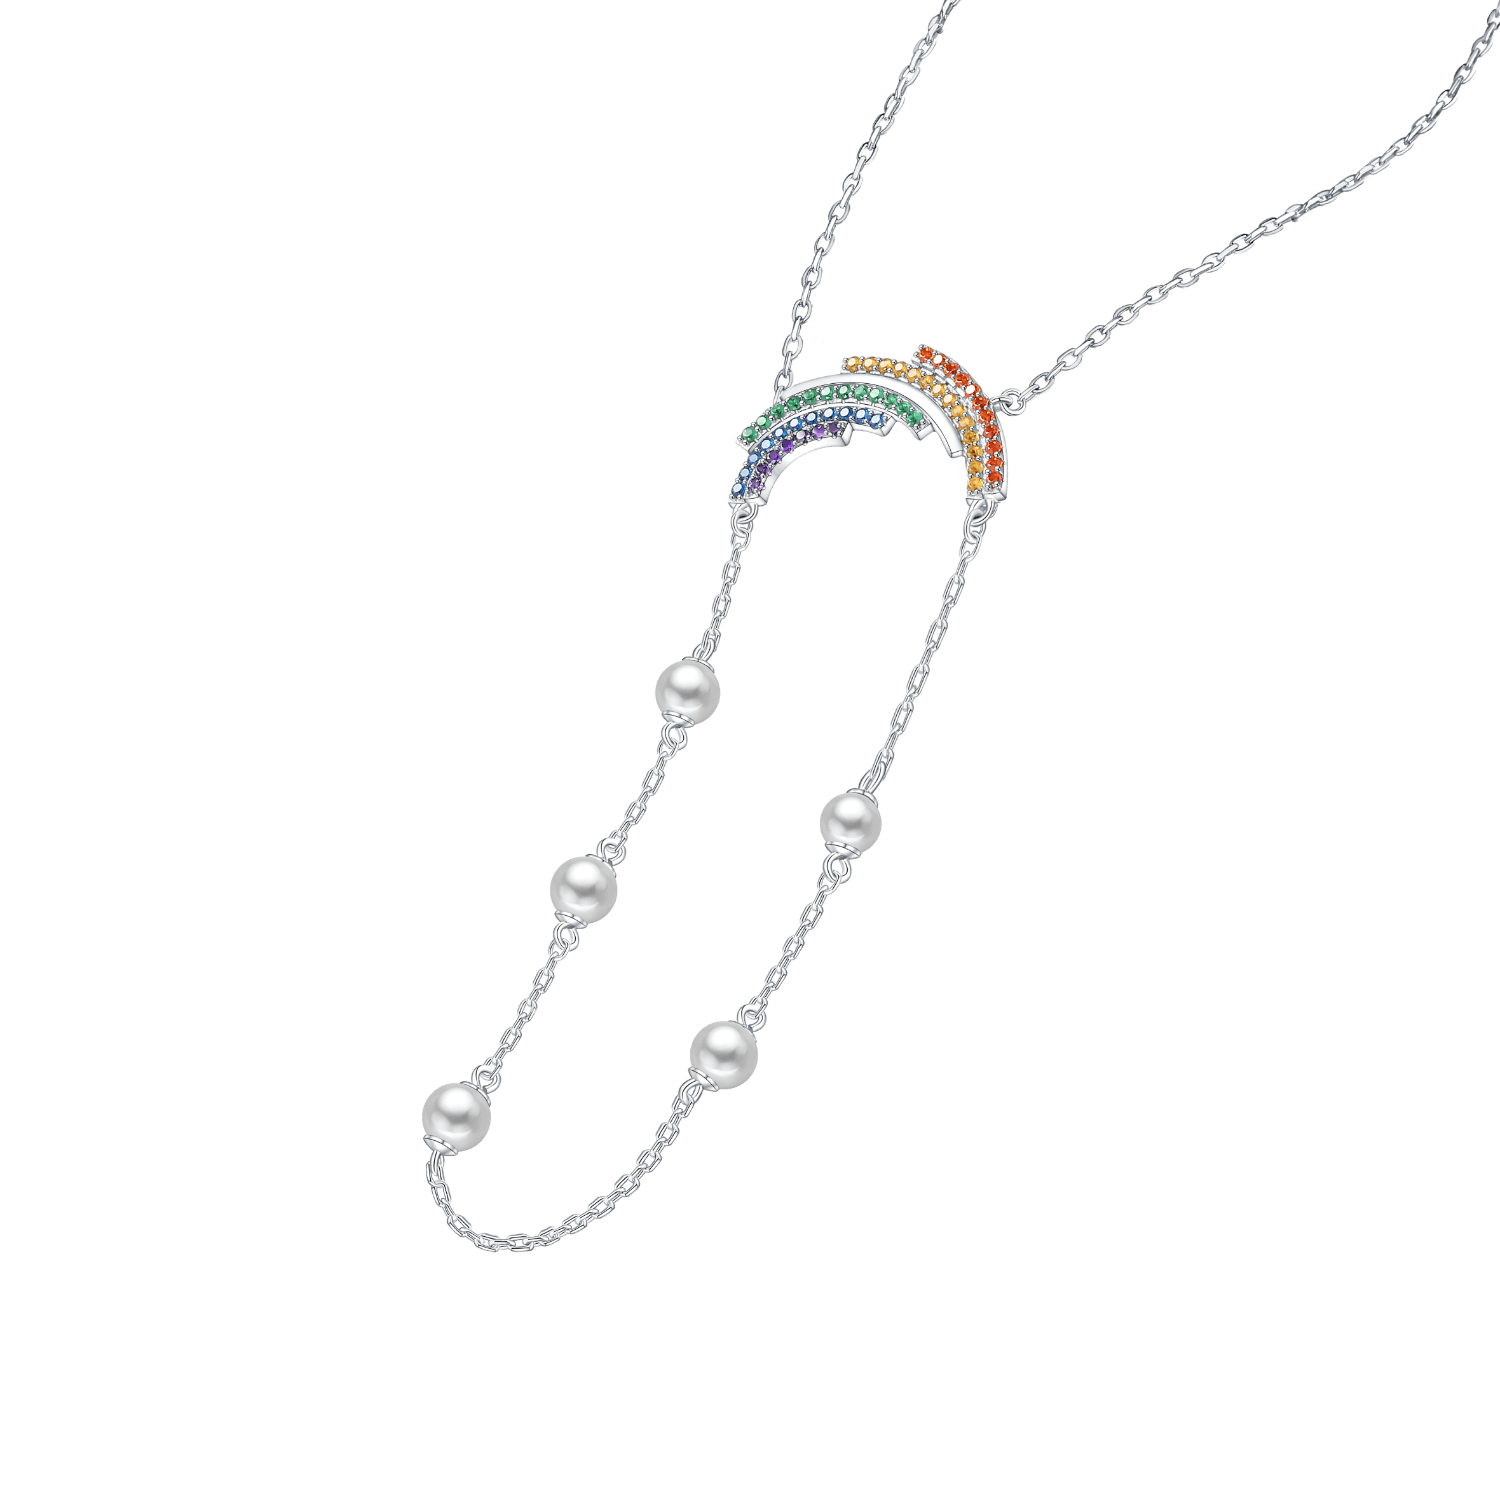 Rainbow Lariat Necklace